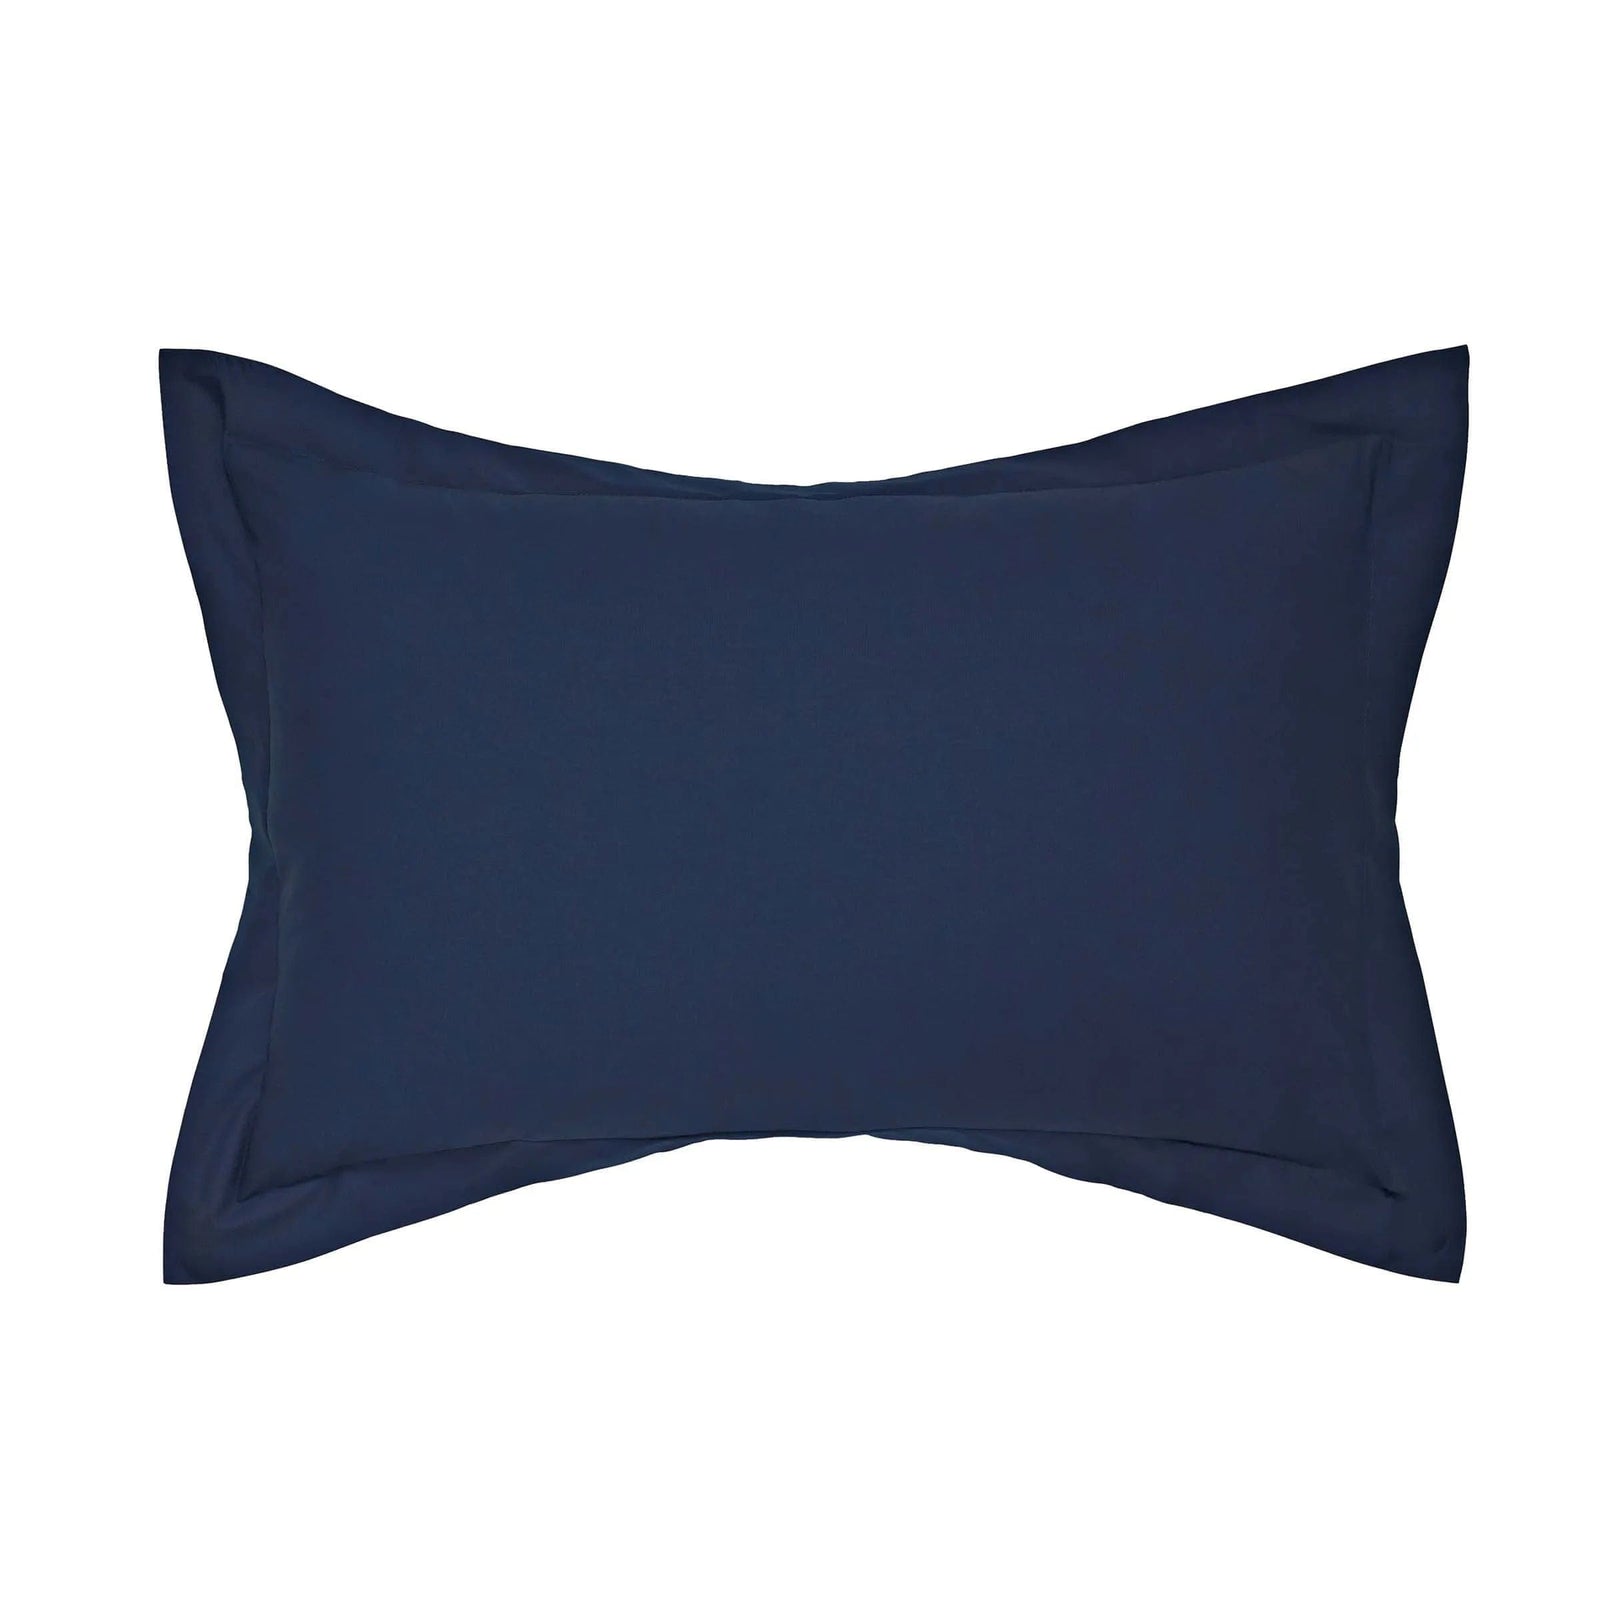 Helena Springfield Plain Dye Percale Oxford Pillowcase in Navy